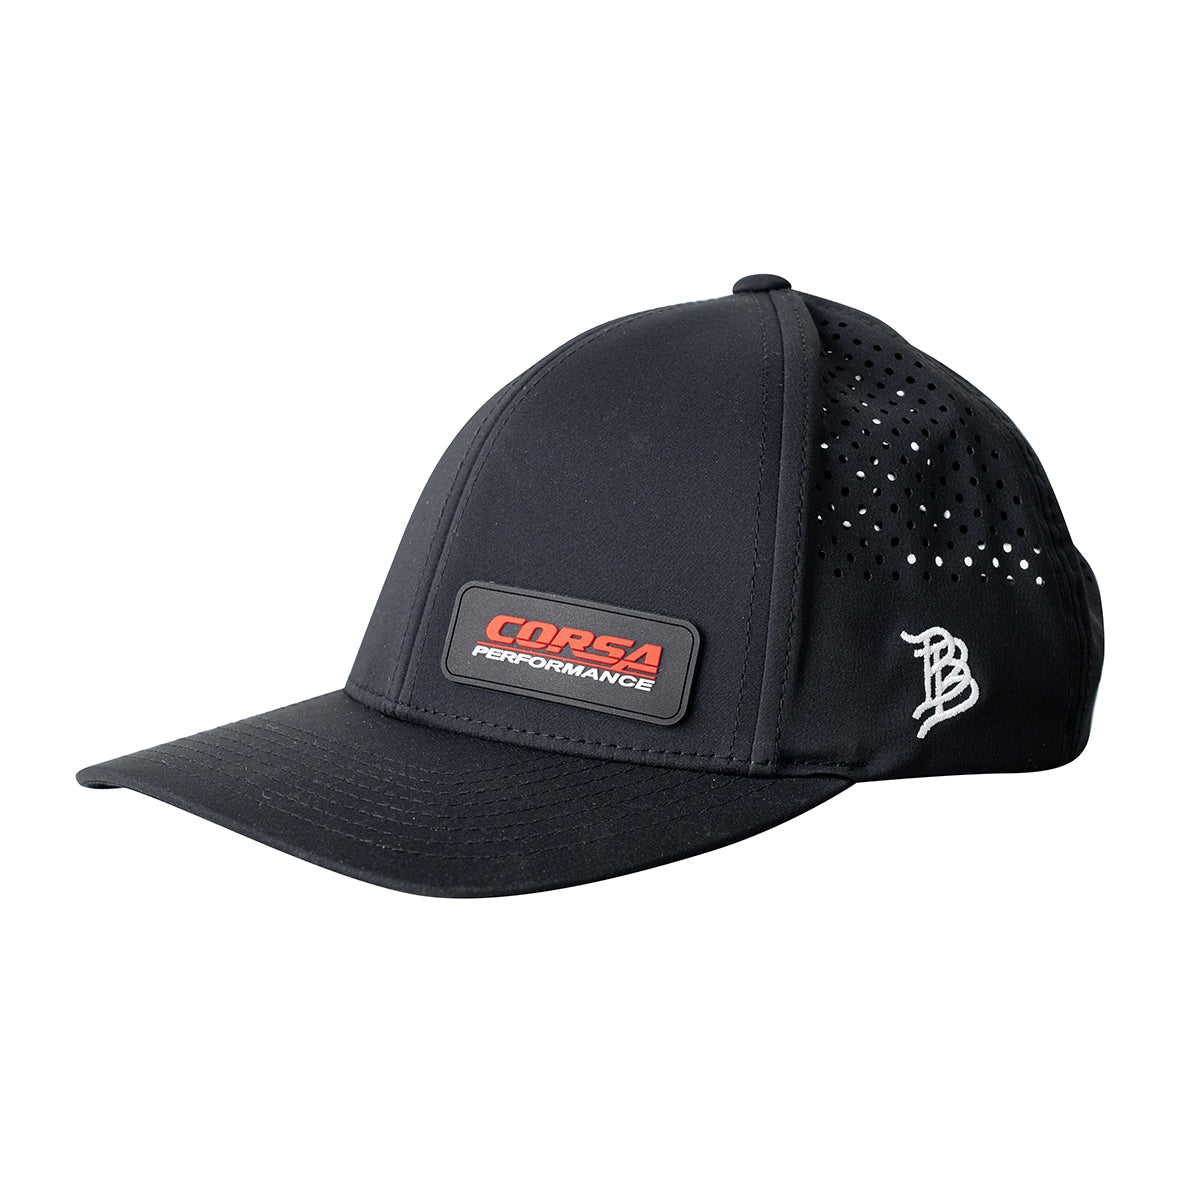 Velcro Back / CORSA Hat | Black w Small Patch